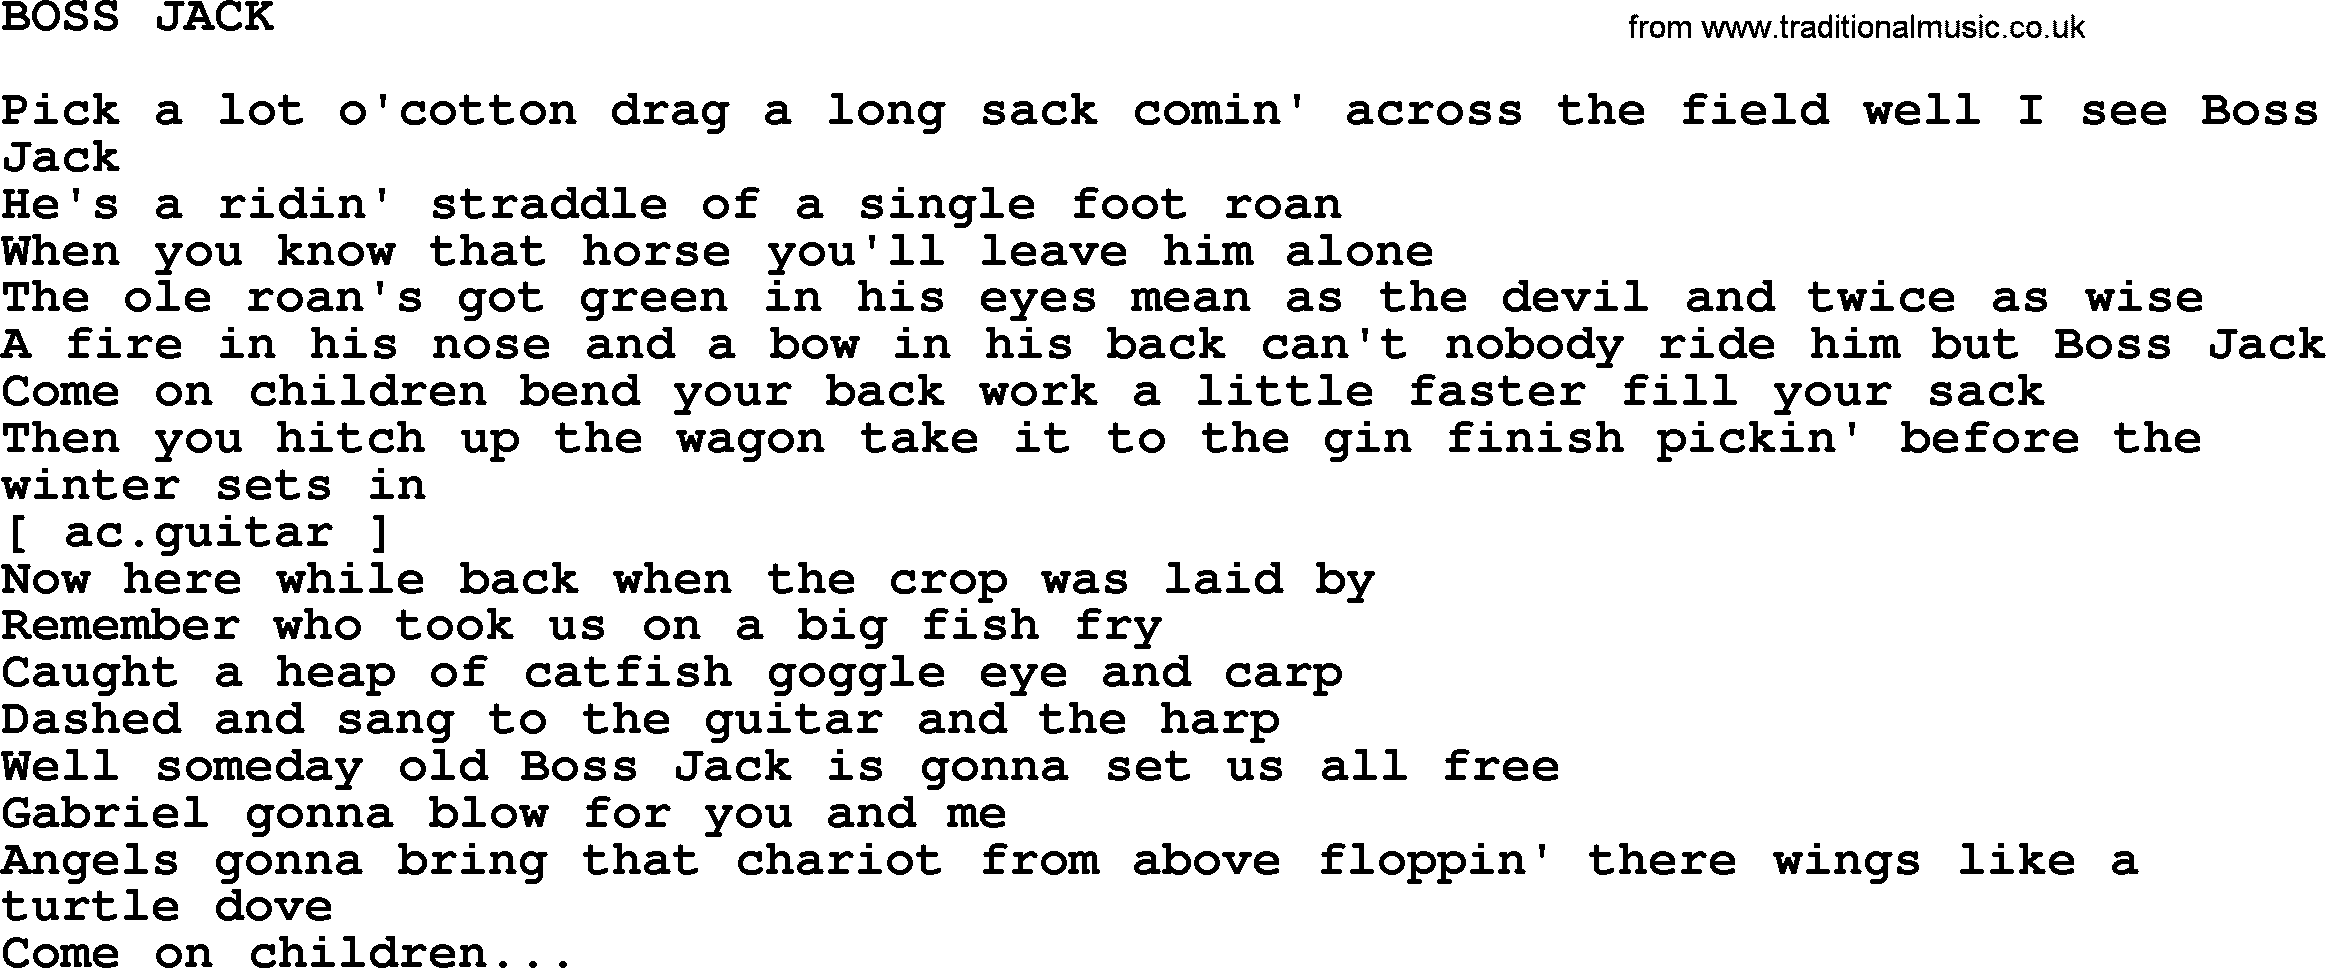 Johnny Cash song Boss Jack.txt lyrics